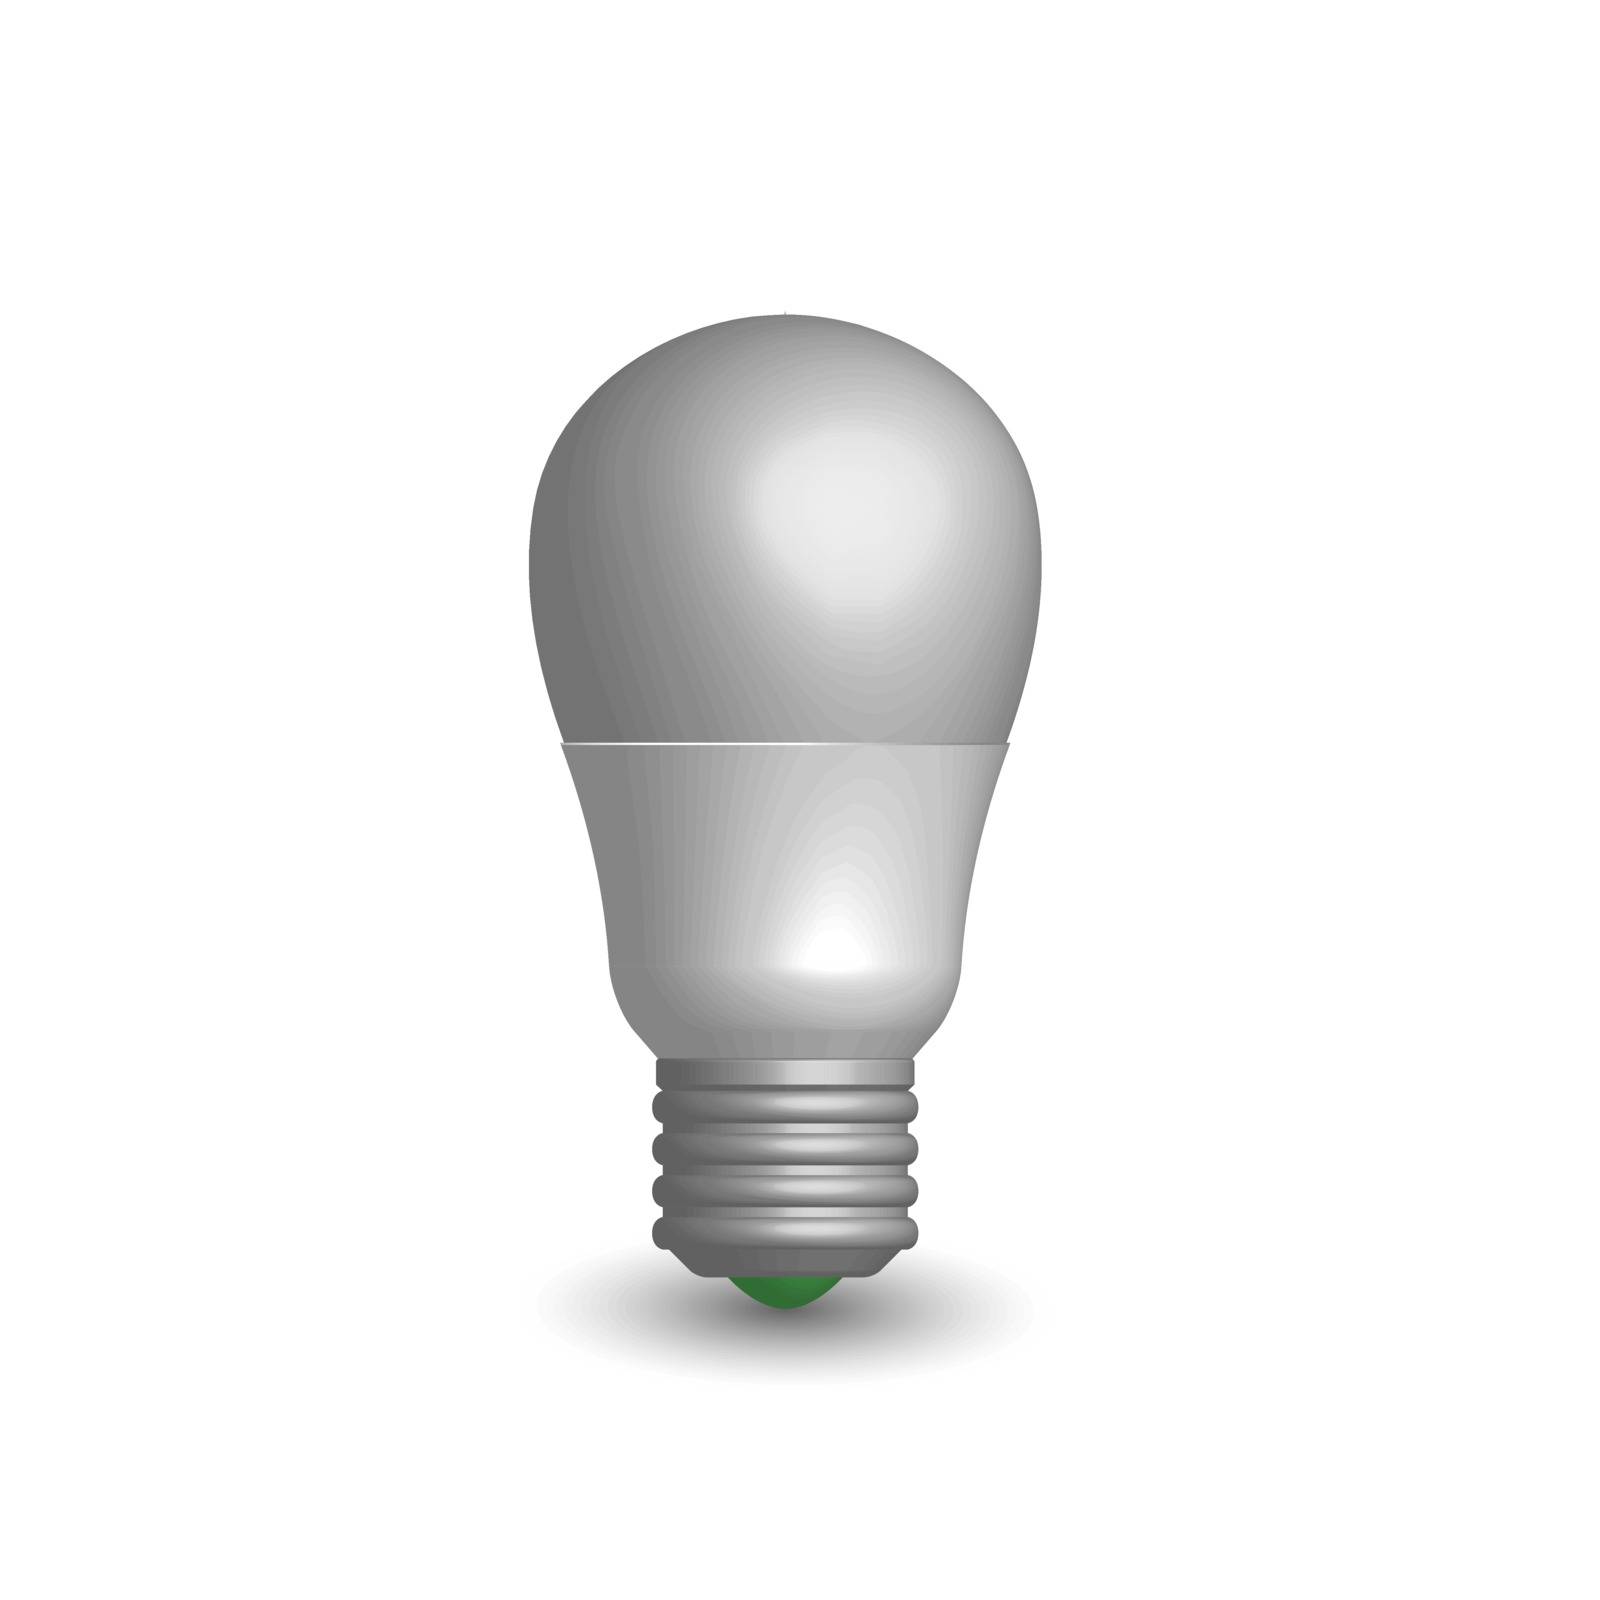 LED bulb in 3d, vector illustration. by kup1984